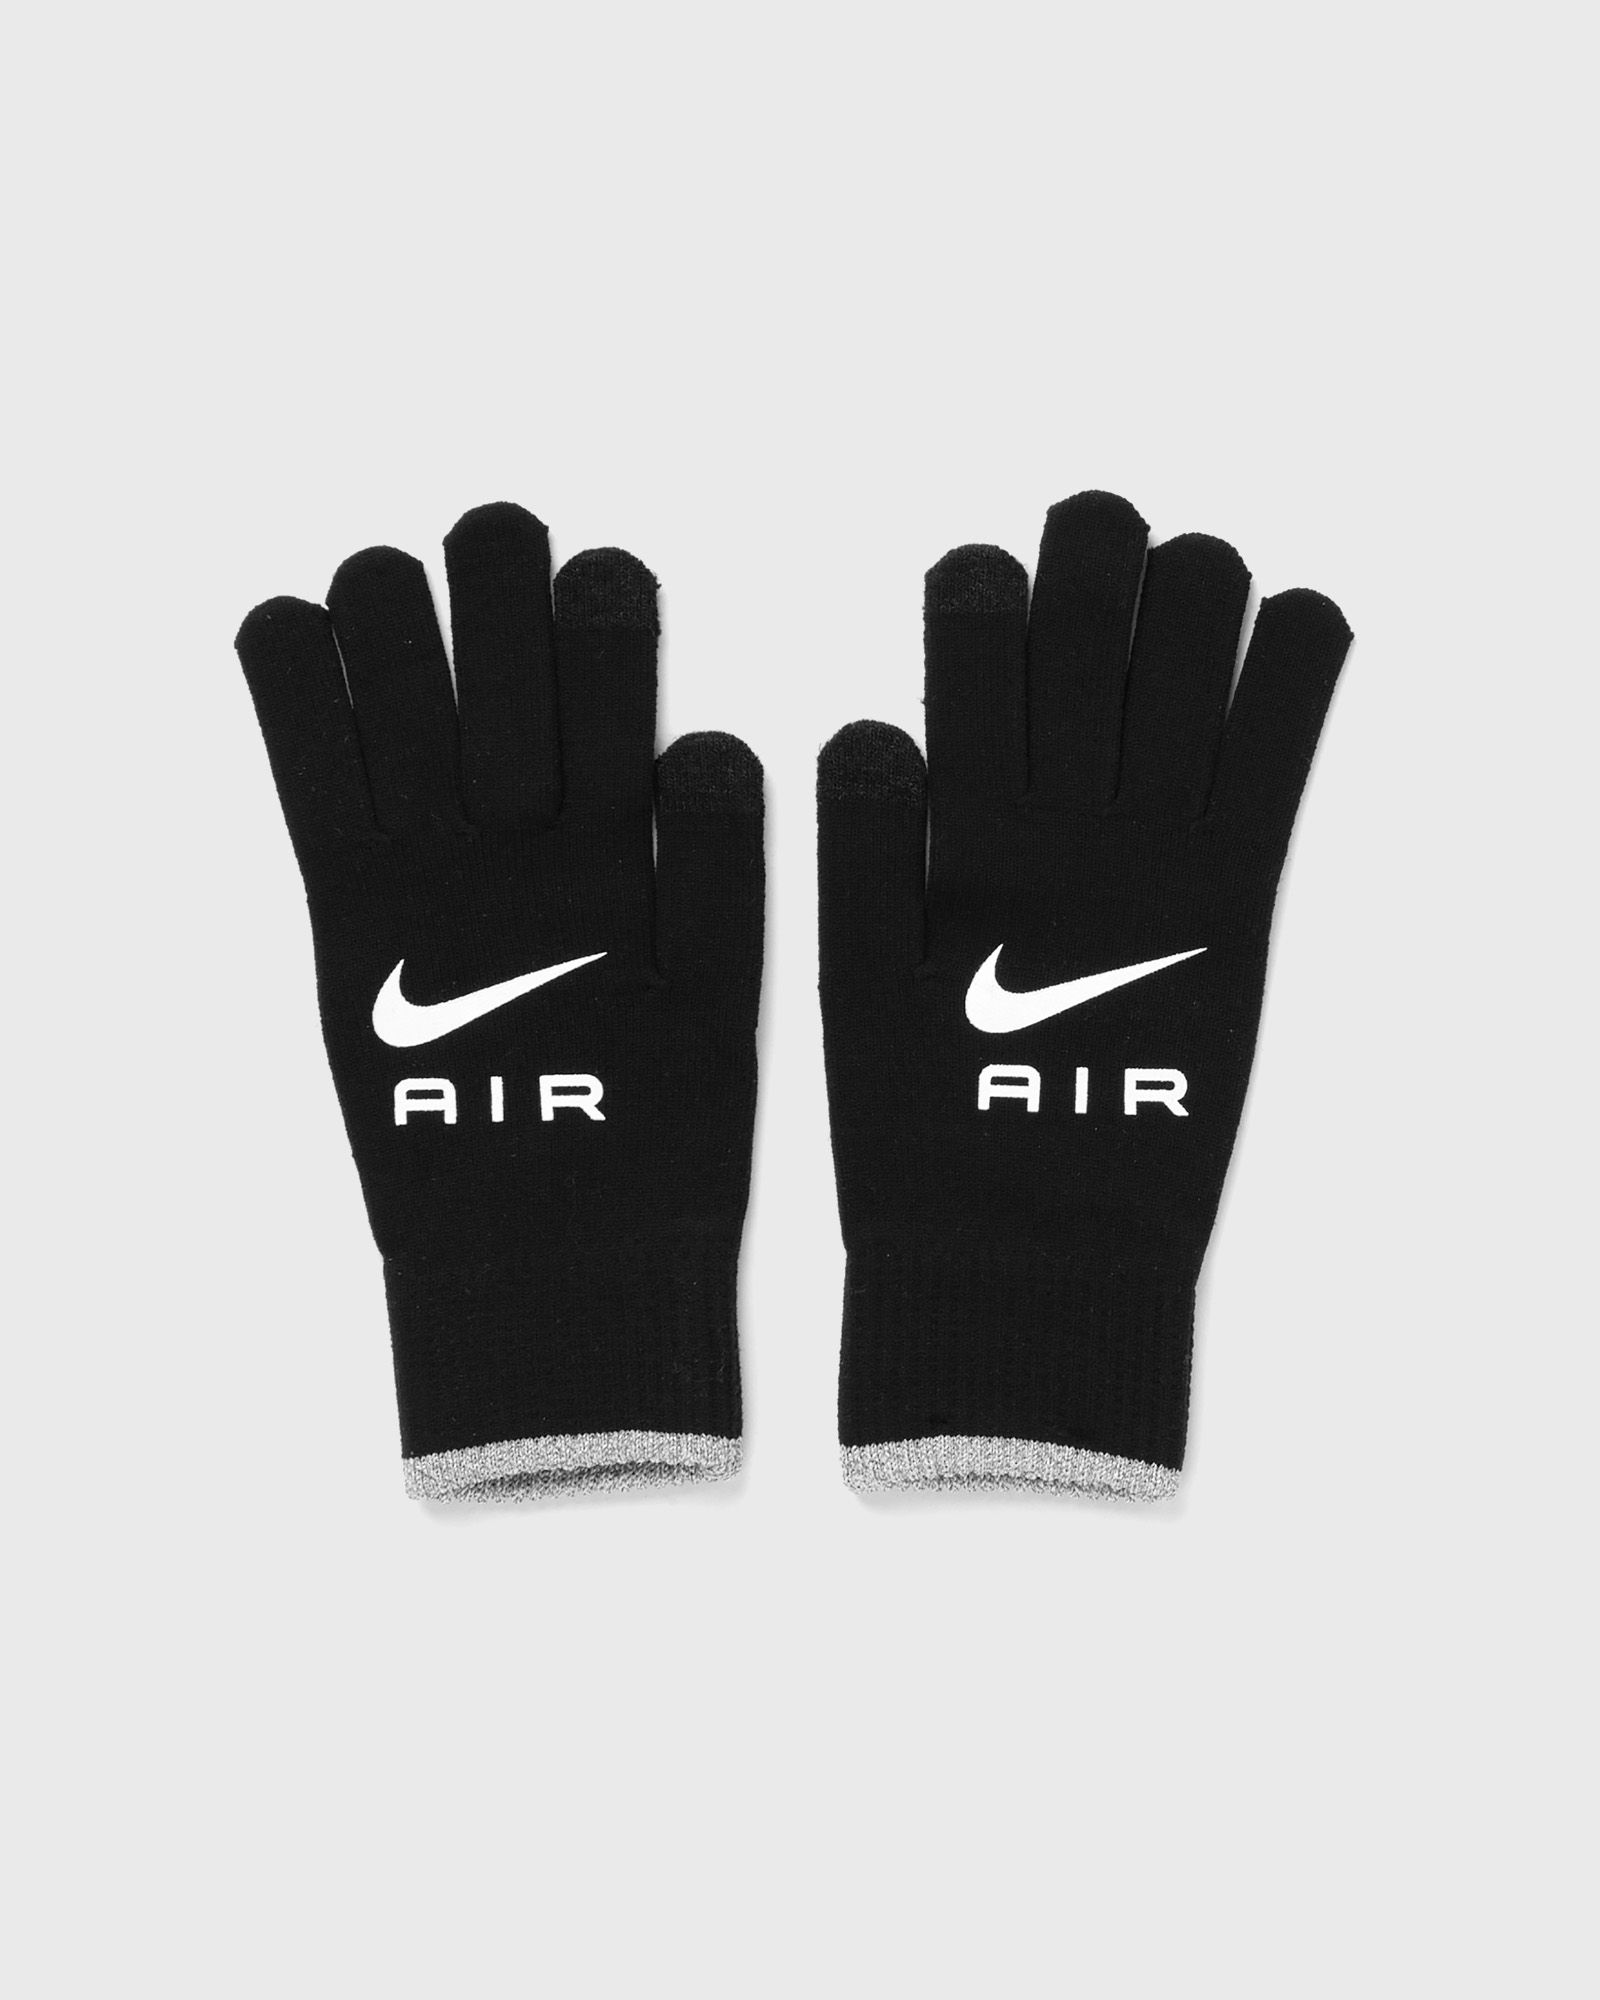 Nike - gloves knit  air men gloves black in größe:l/xl